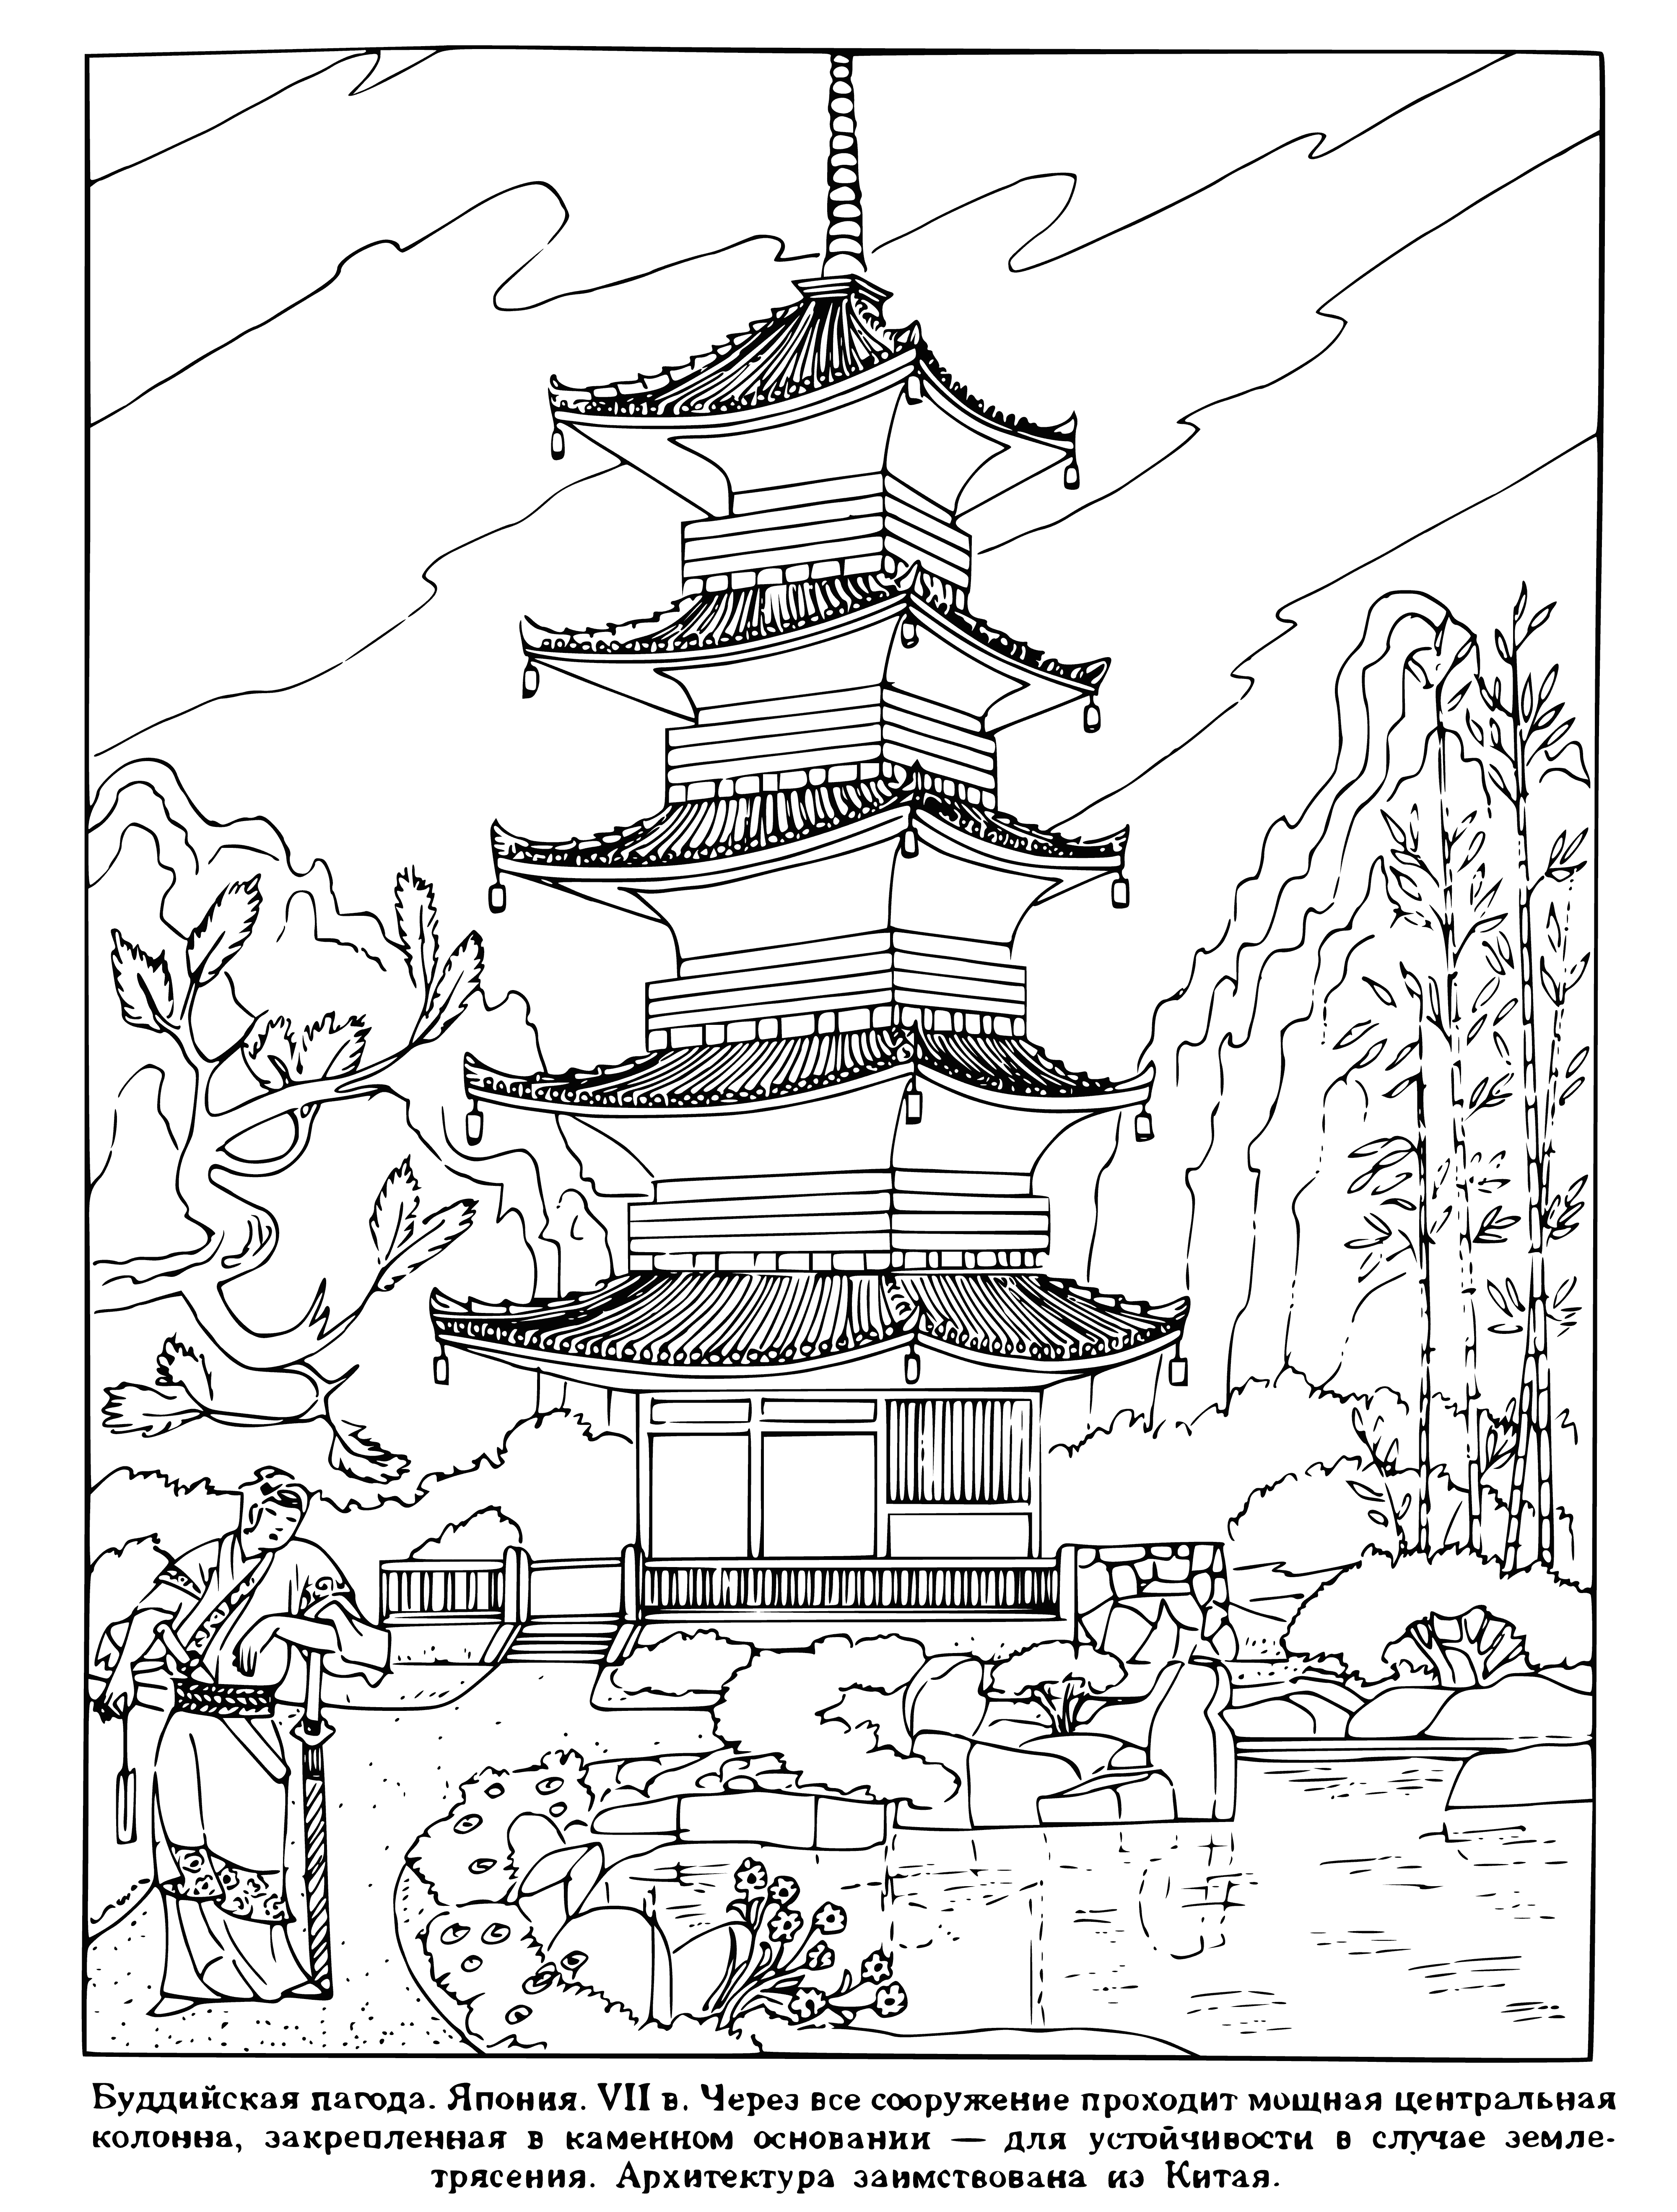 Boeddhistiese pagode inkleurbladsy